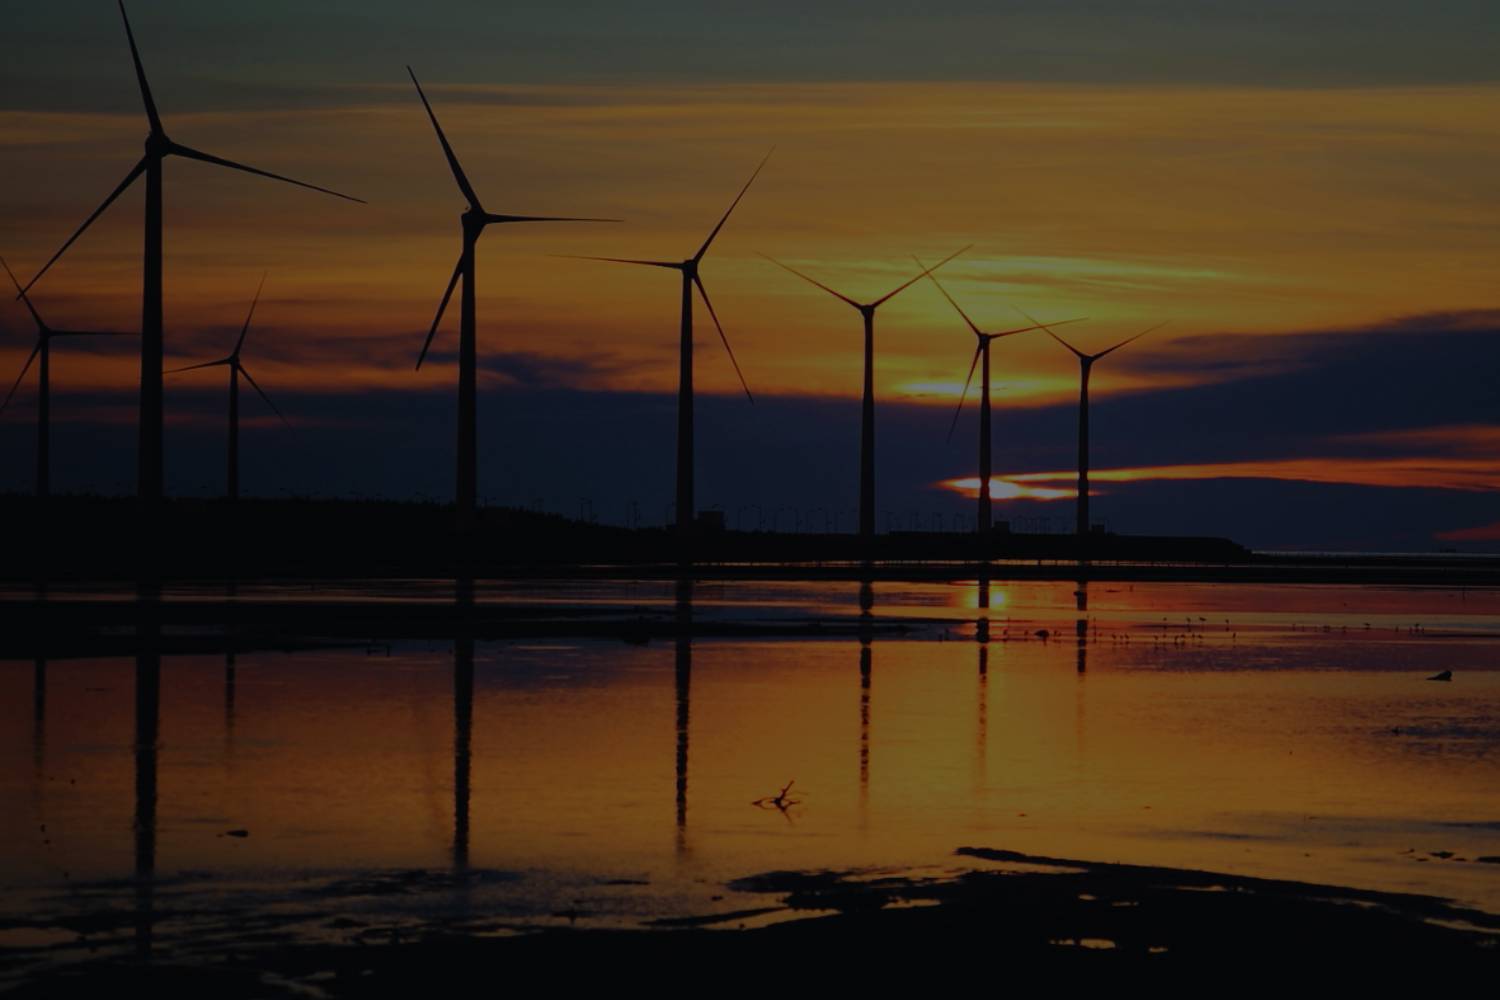 wind turbines in a field creating renewable energy